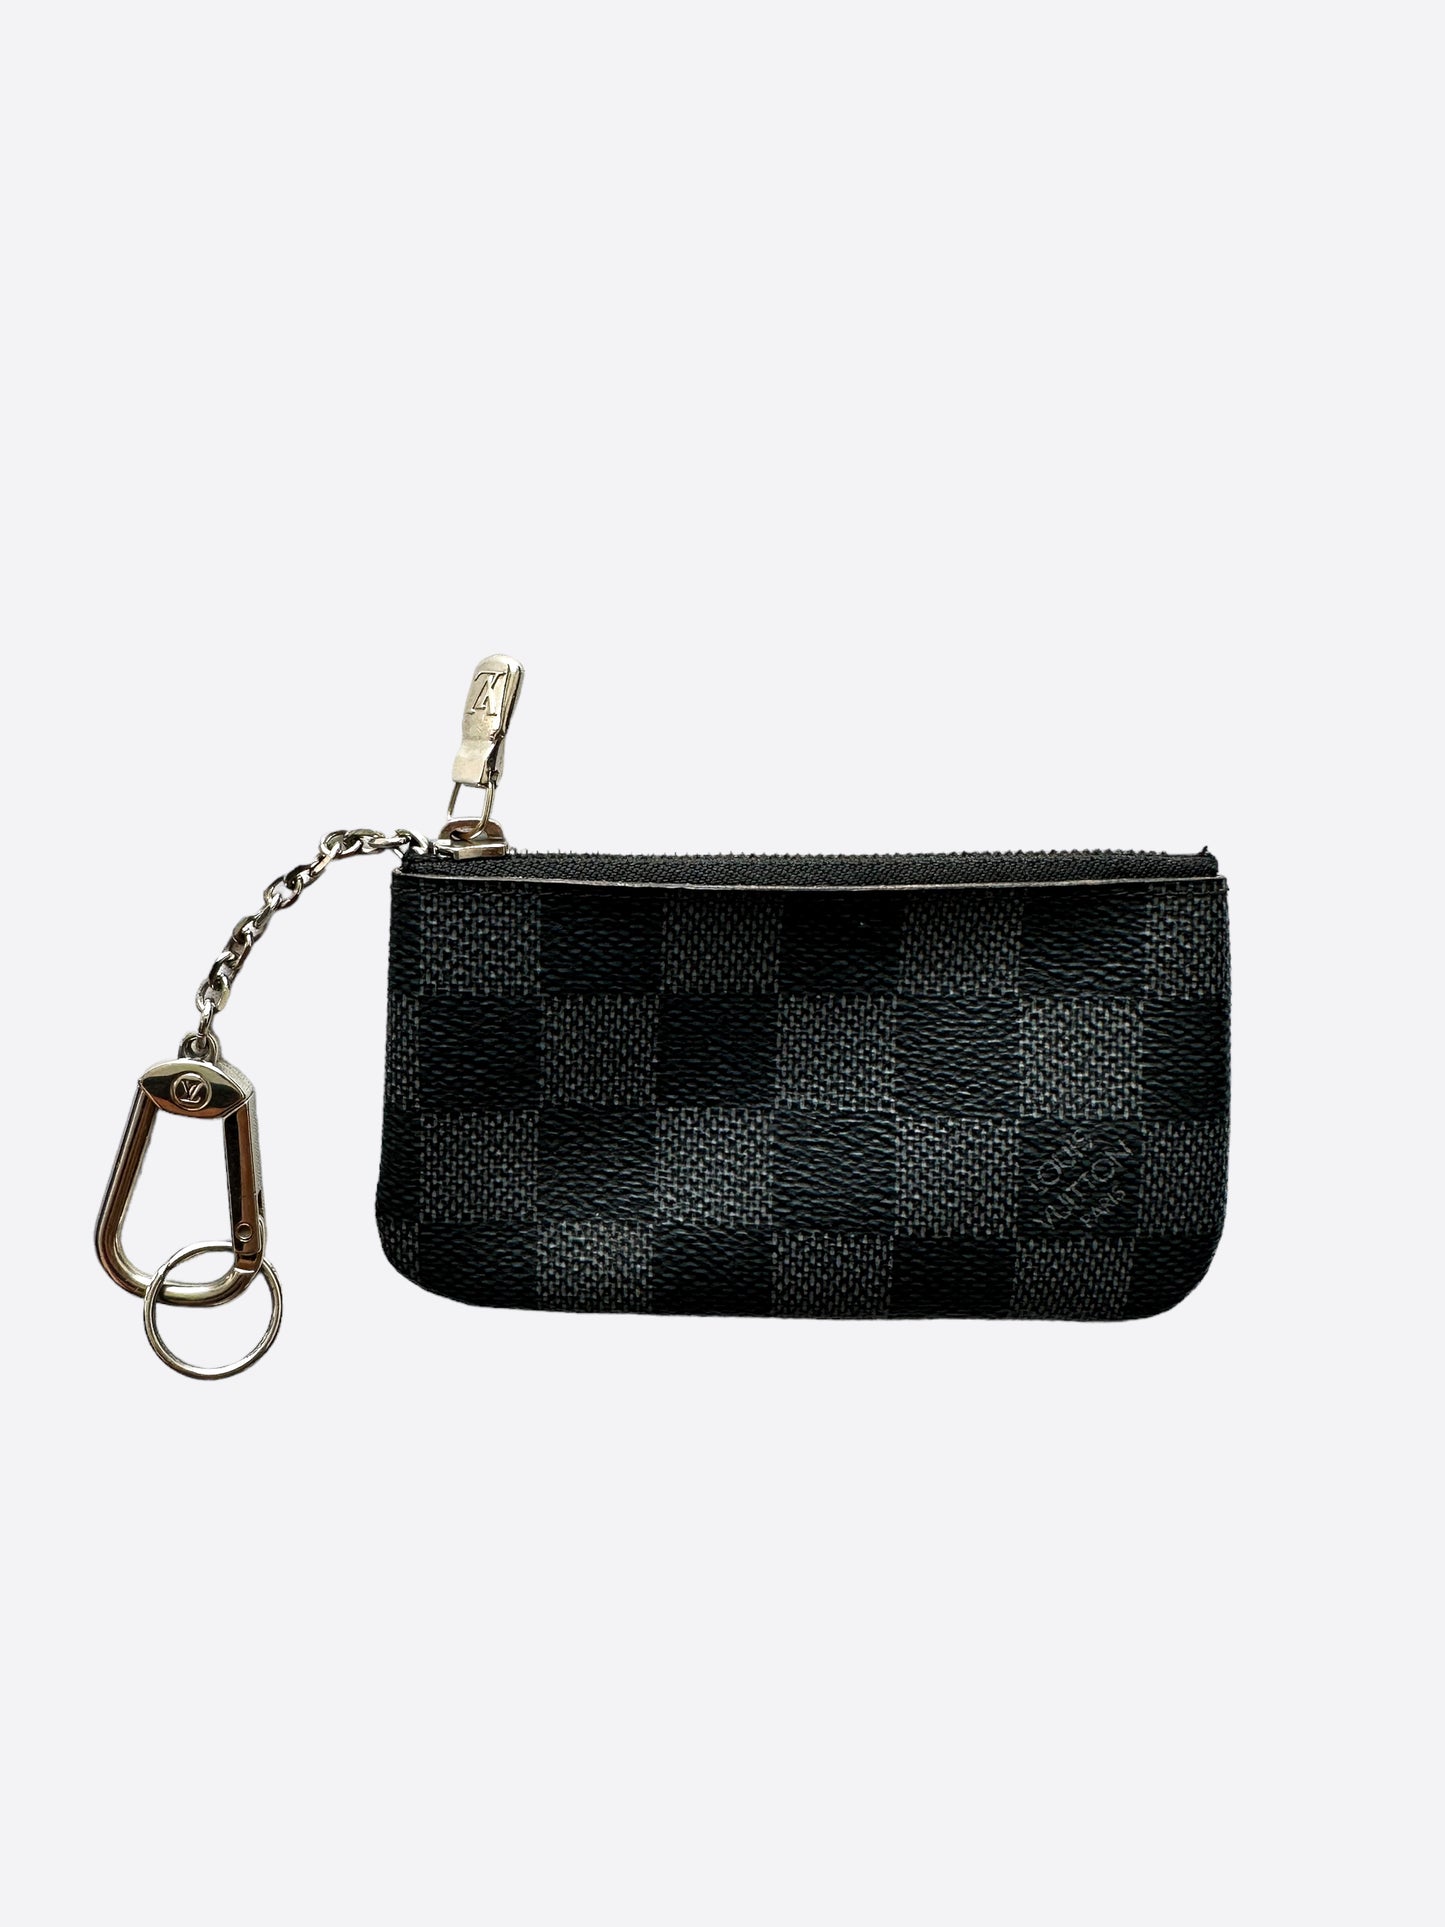 Louis Vuitton Key Pouch Damier Graphite Like New Retail $325